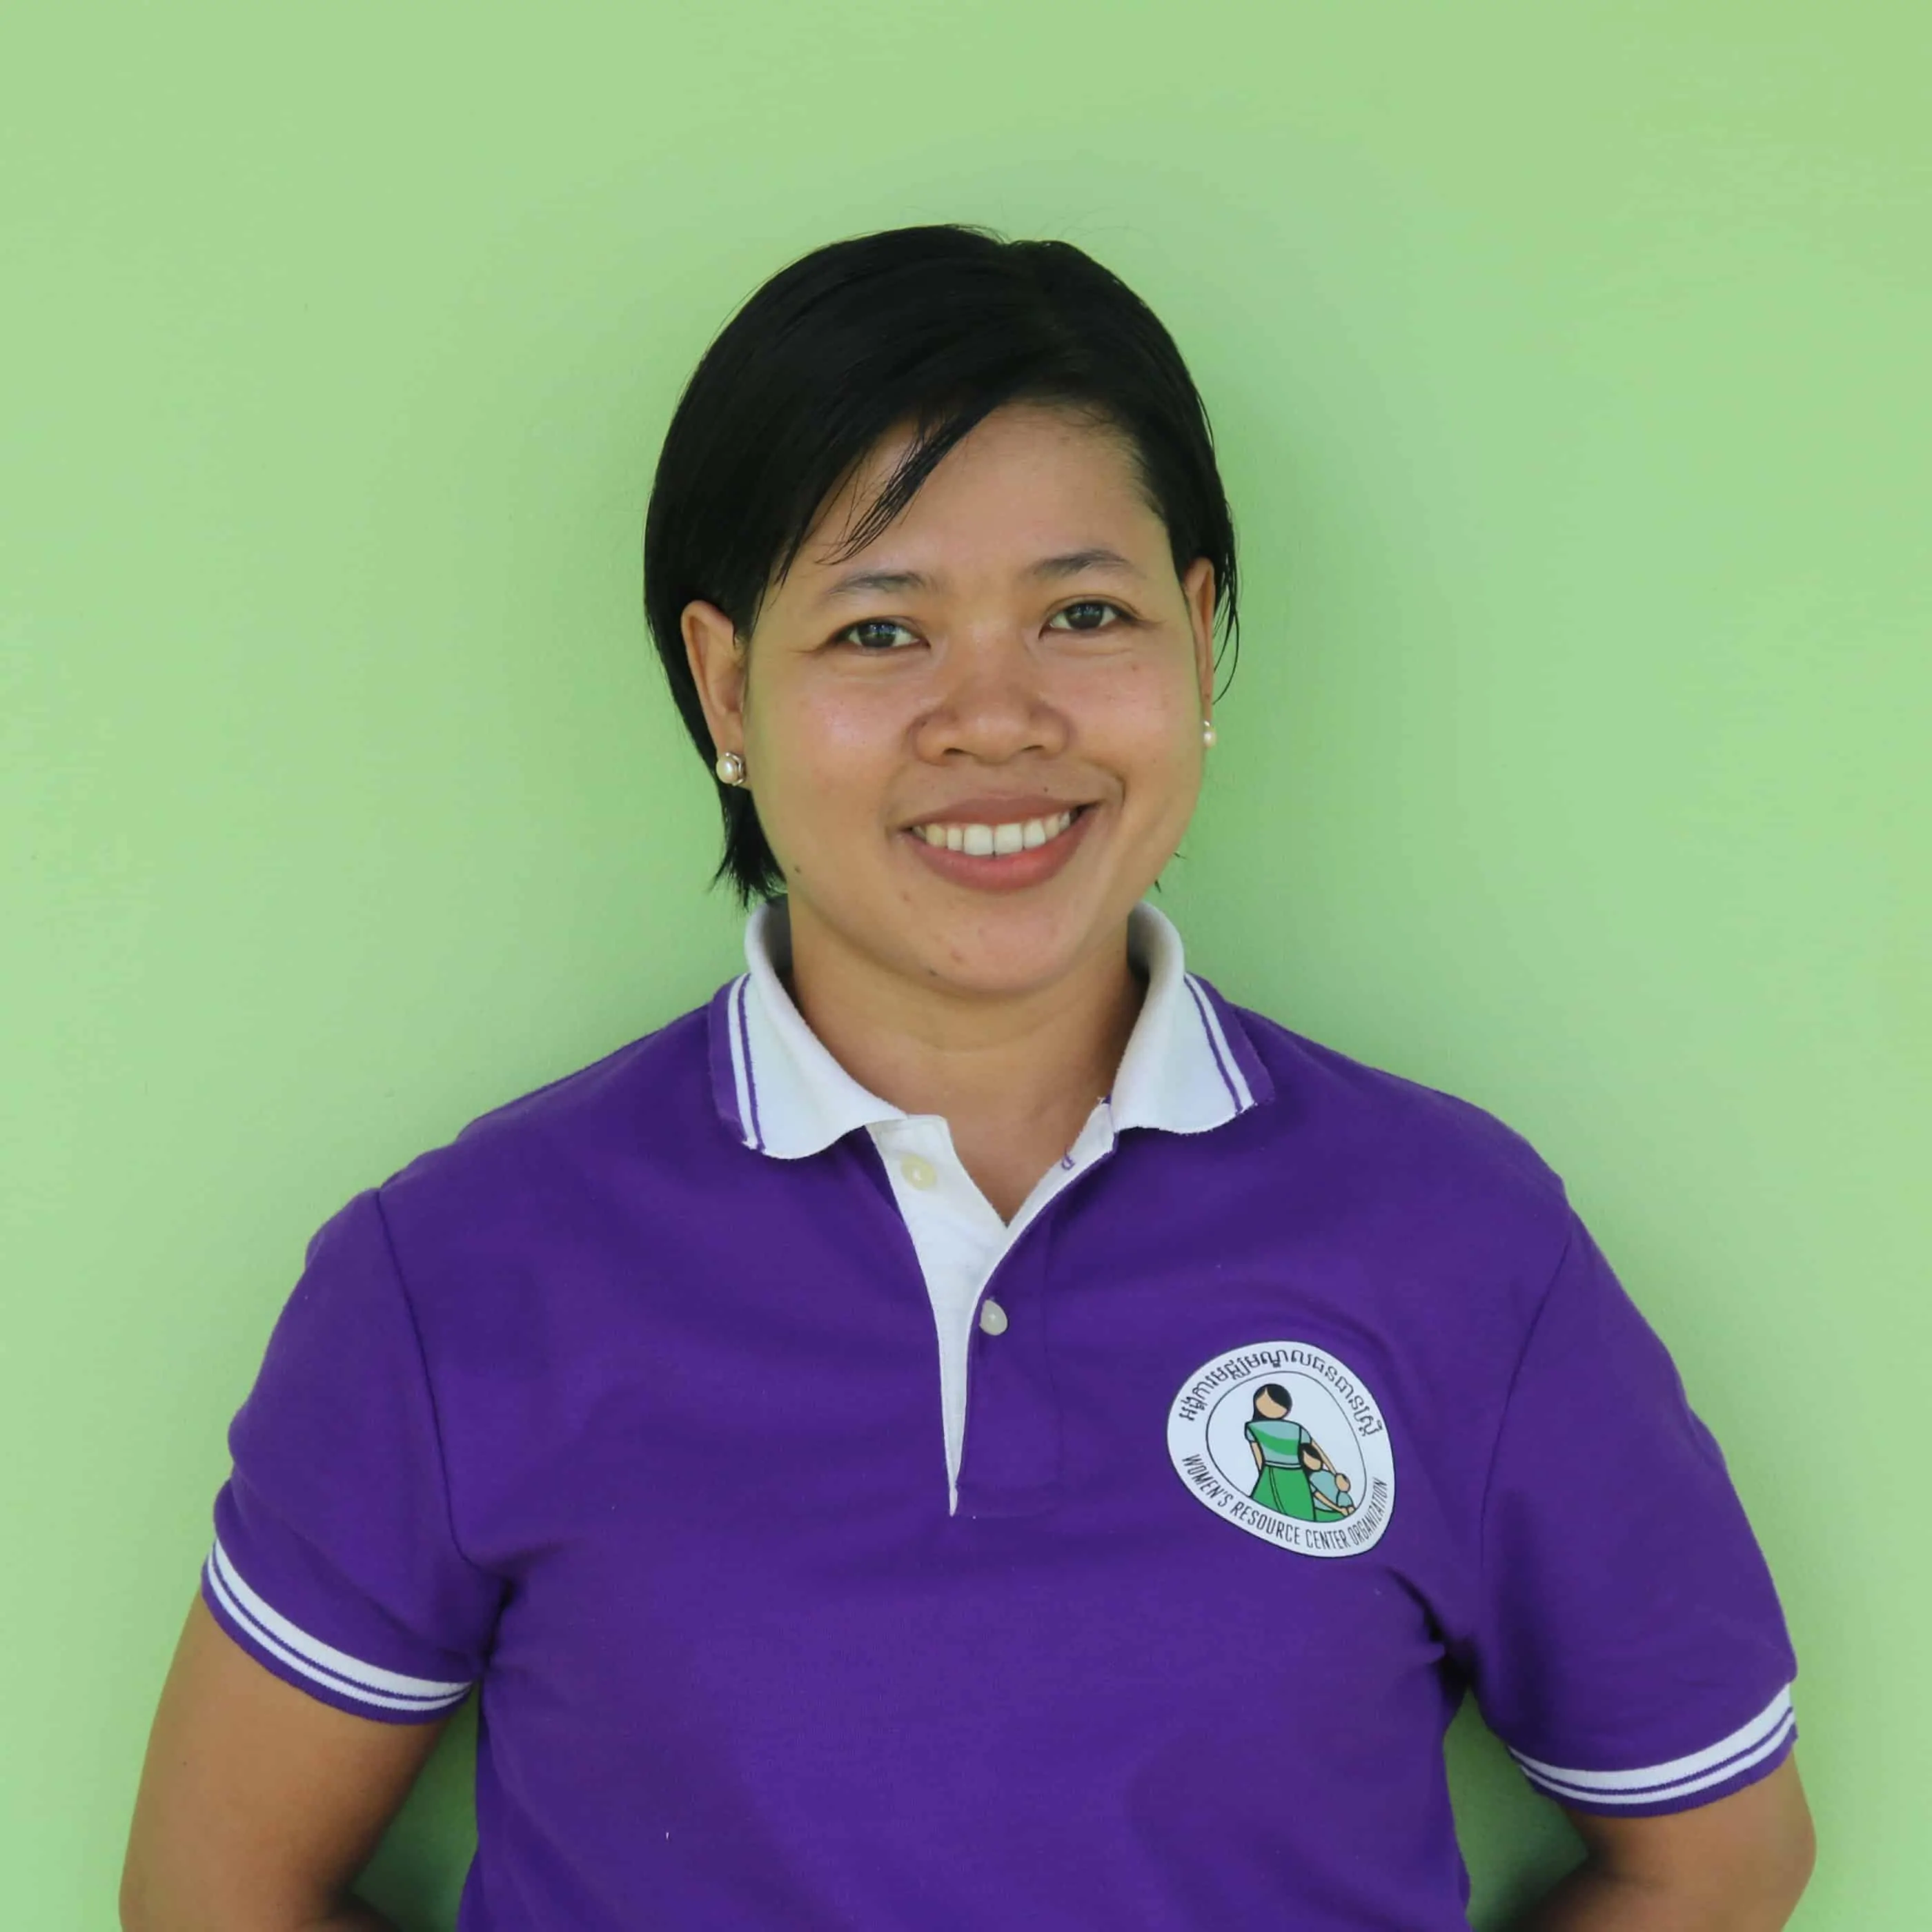 Pisey Khim, Program Manager at Women's Resource Center, Cambodia